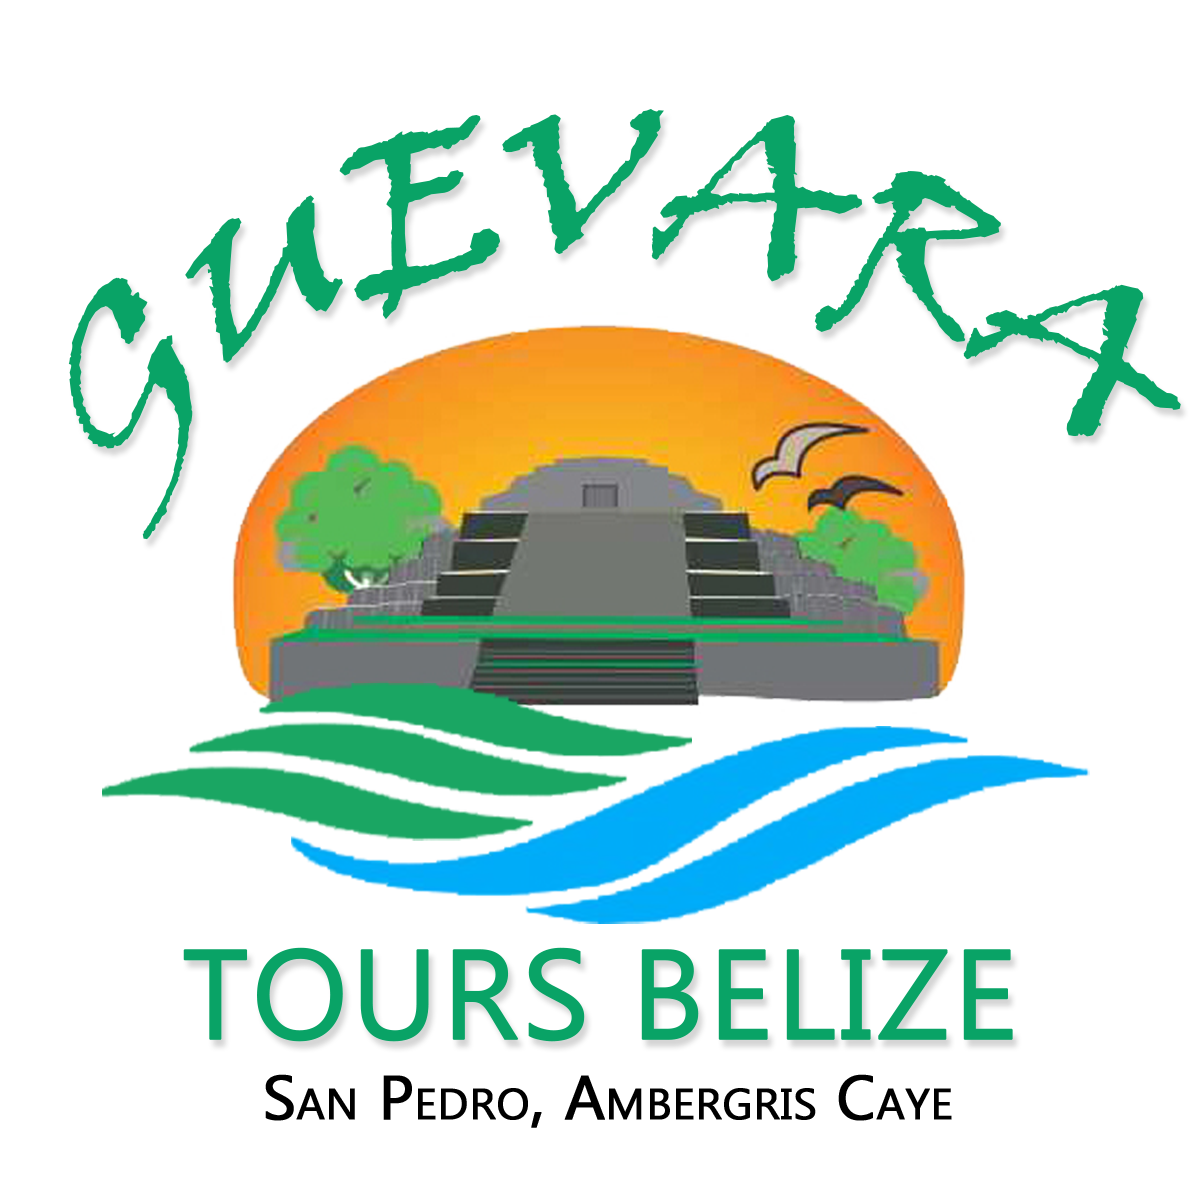 guevara tours belize reviews